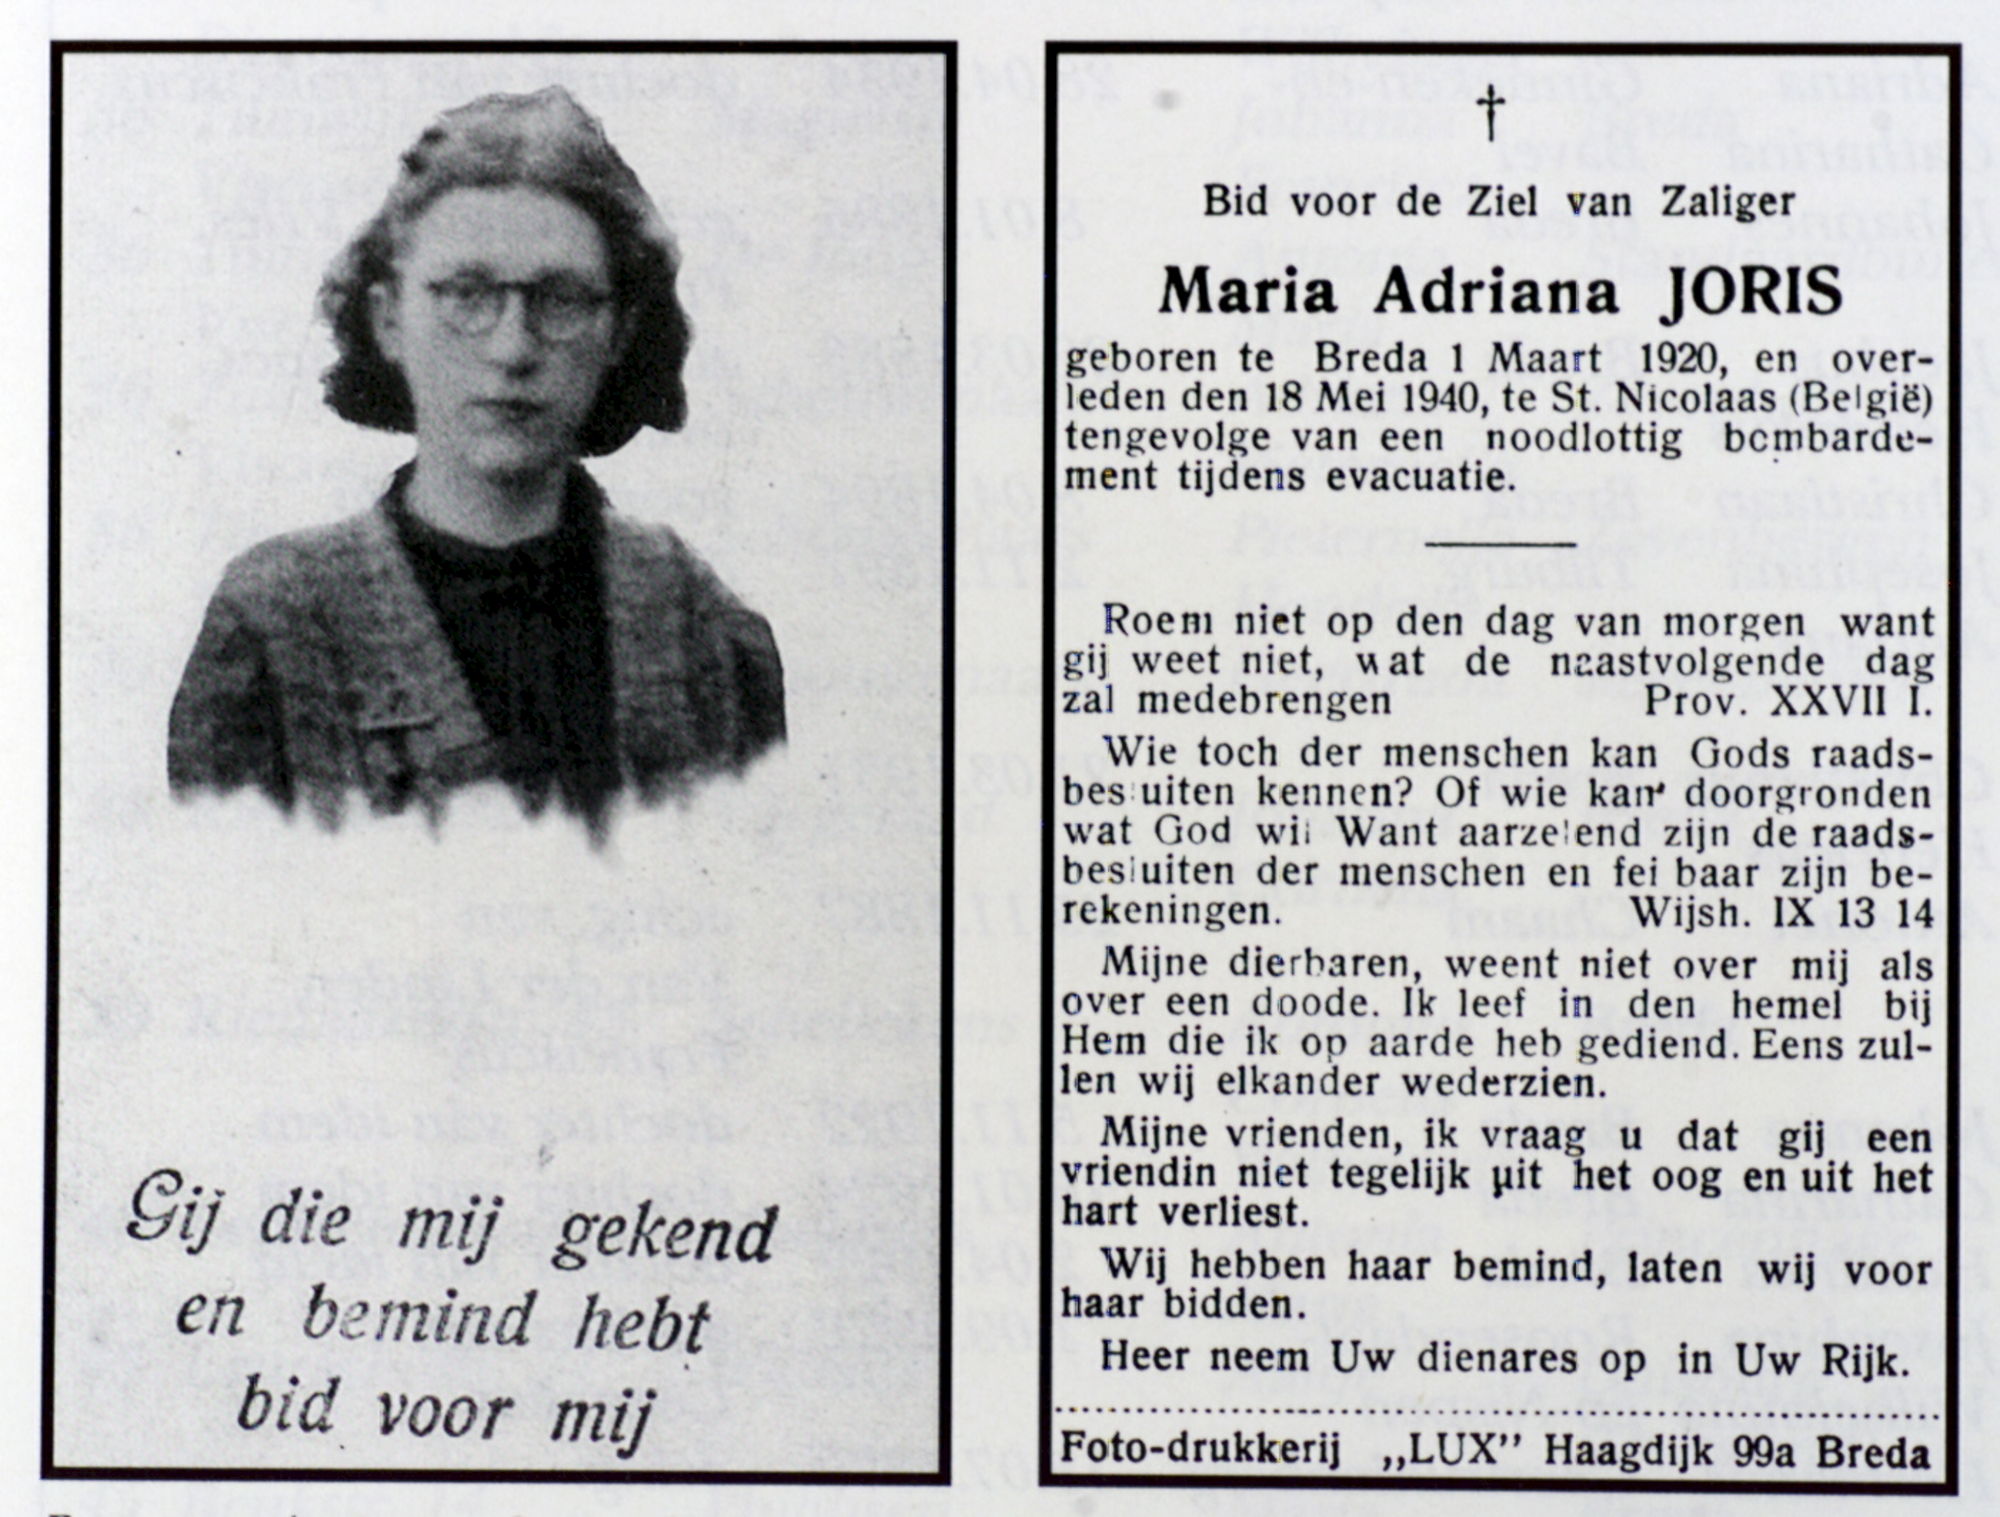 Rouwprentje van Maria Adriana Joris, mei 1940 © archief Stad Sint-Niklaas, schenking Raymond Heymans